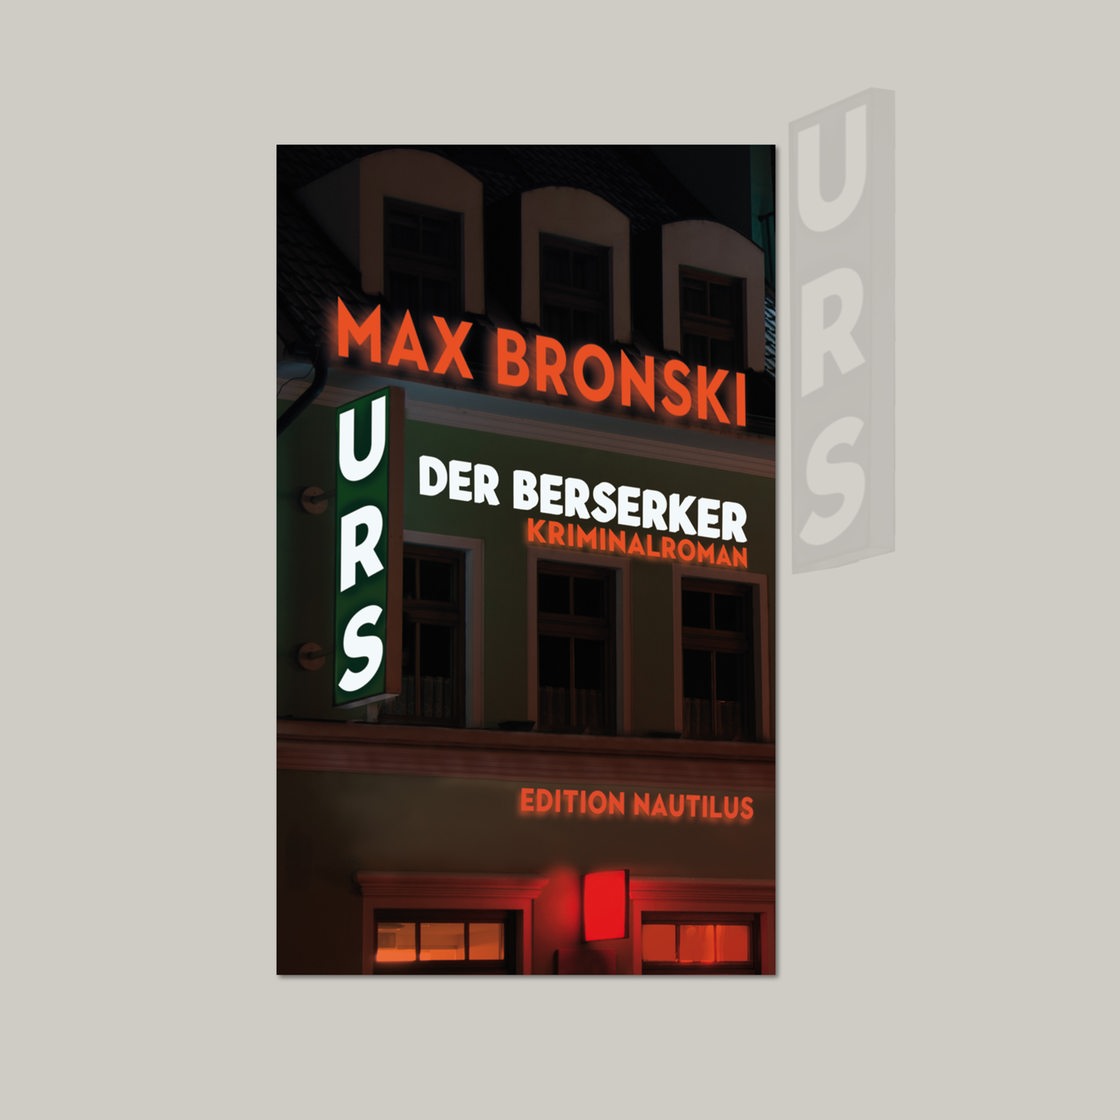 Max Bronski, Urs der Beserker, Edition Nautilus